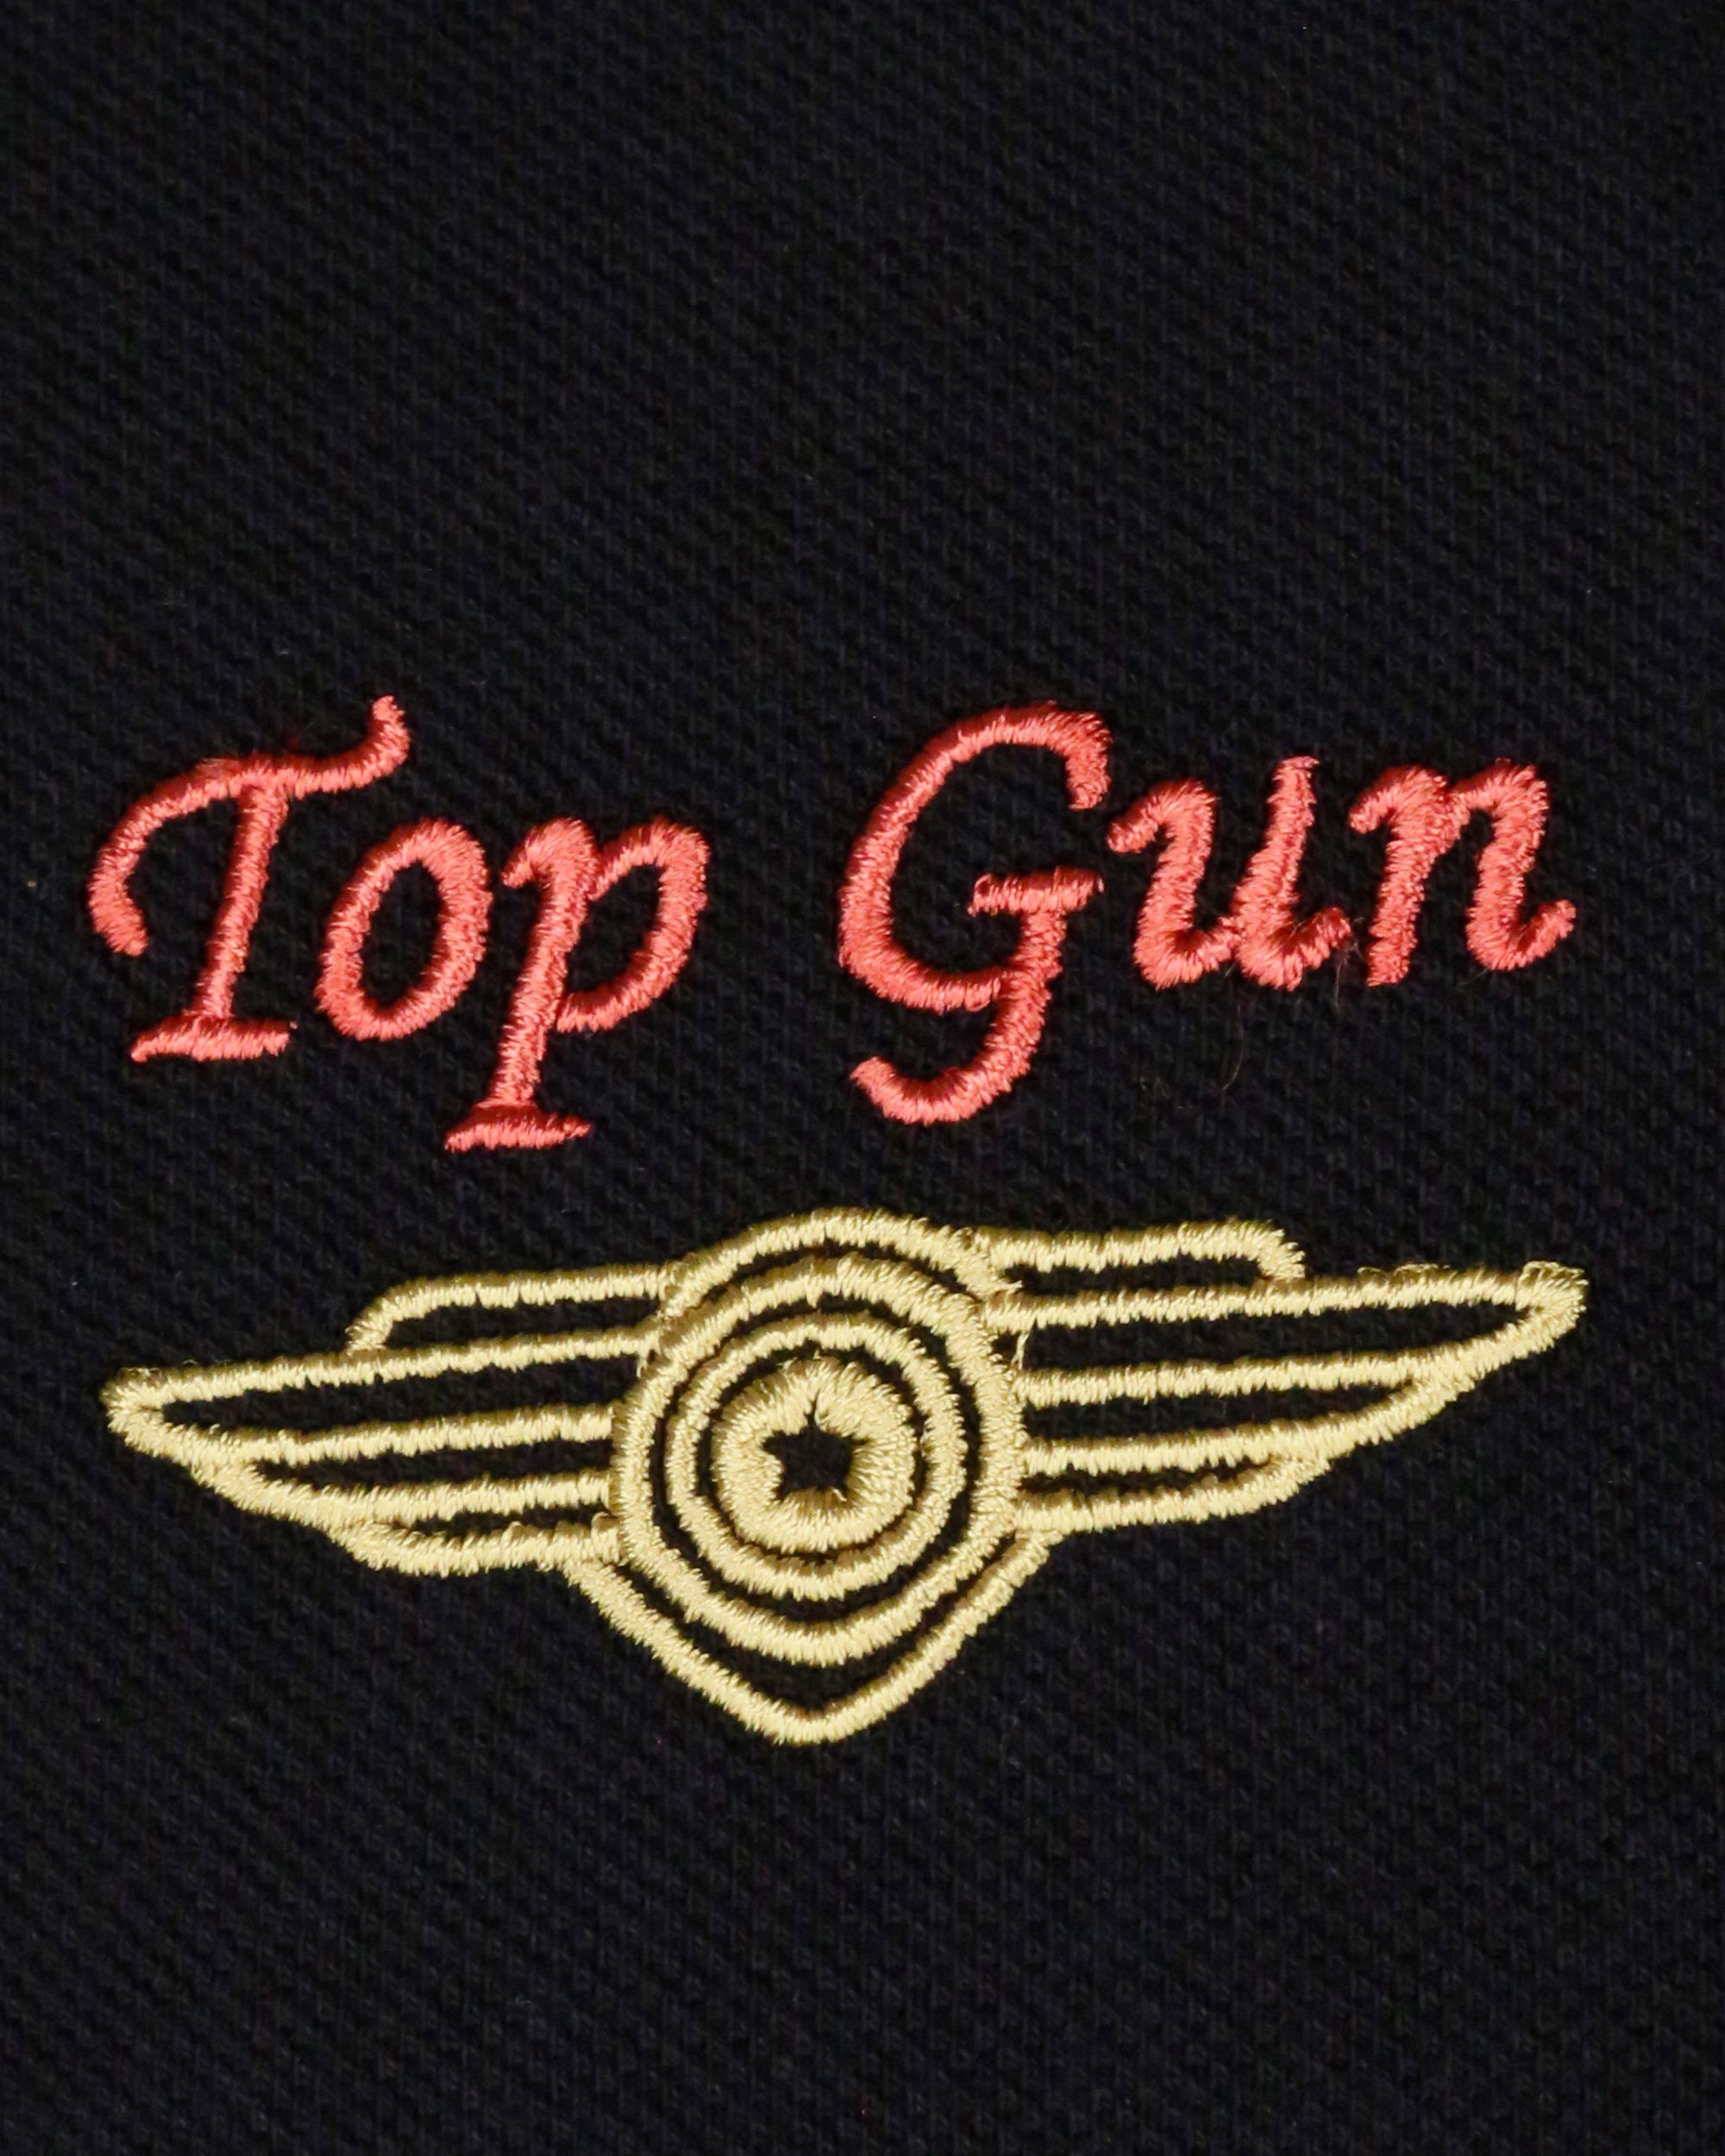 Herren Shirts TOP GUN T-Shirt TG202120071